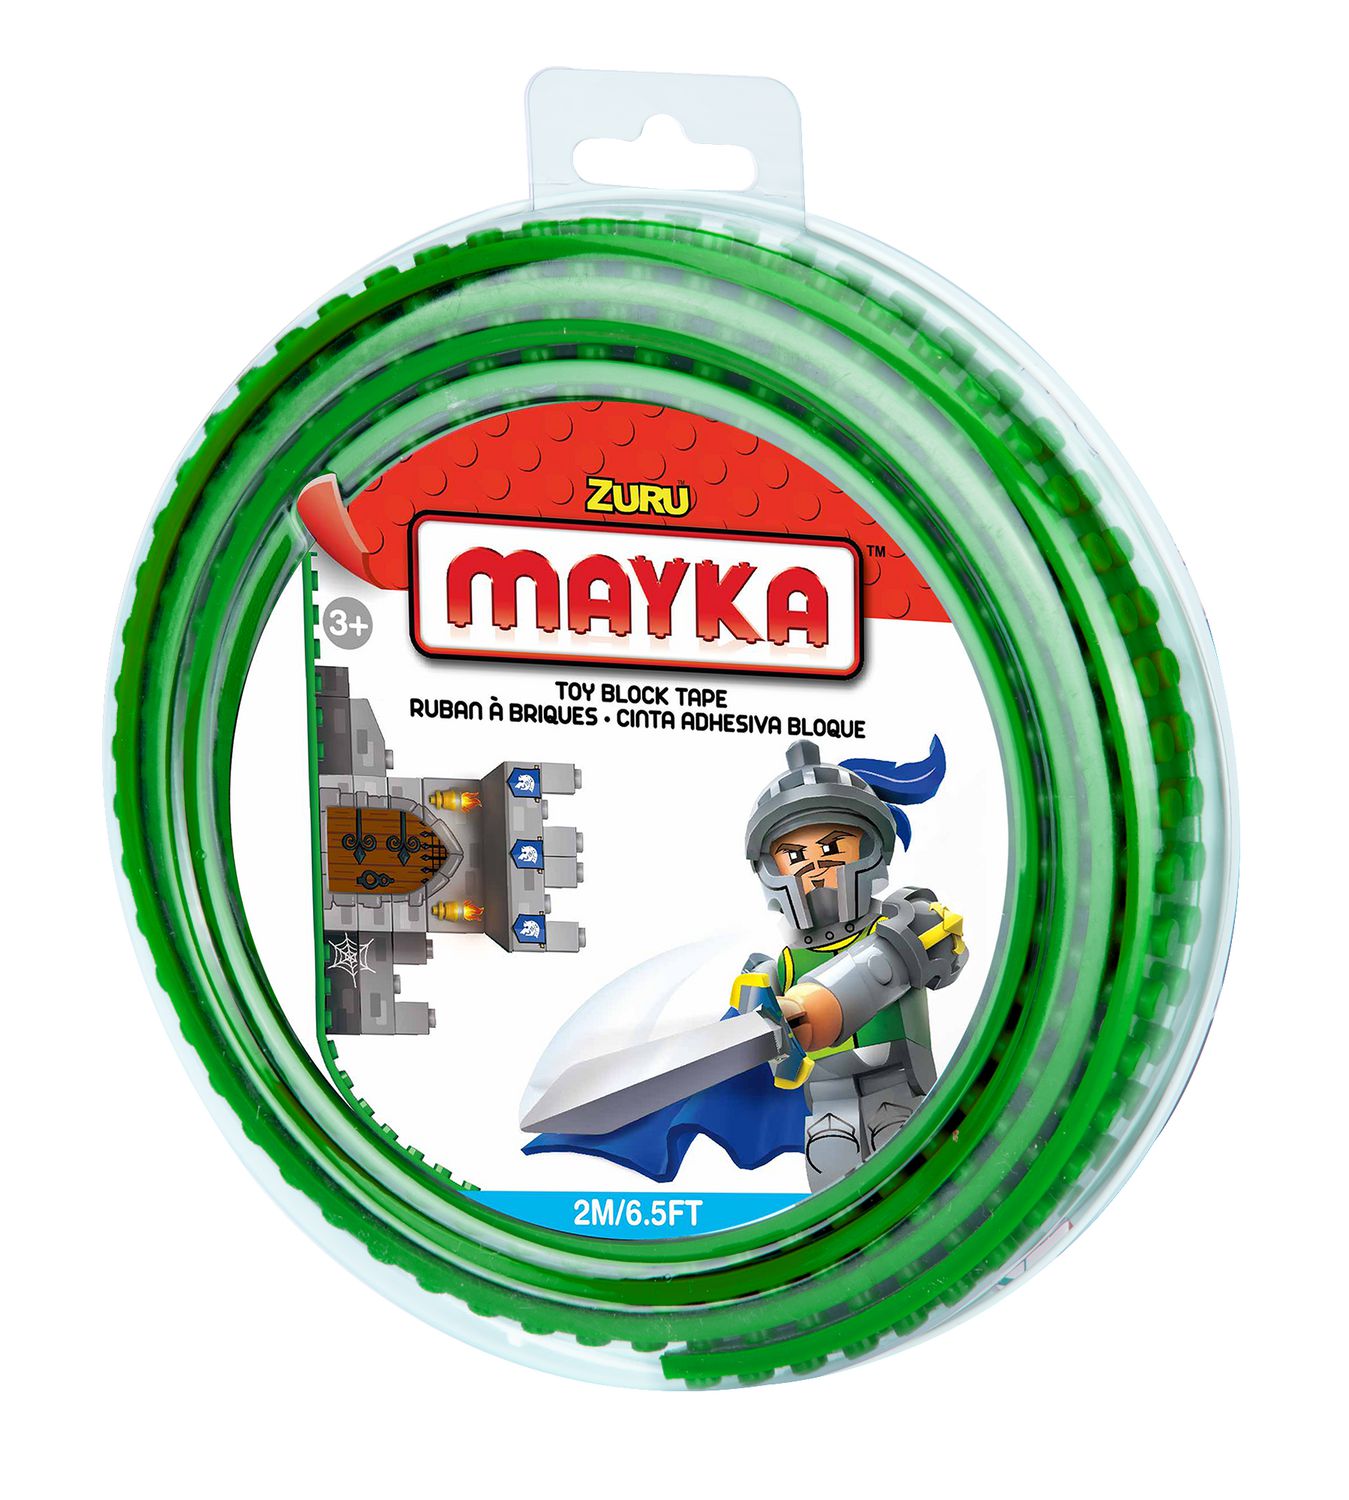 Details about   Mayka Toy Block Tape 2M 6.5 Feet Long by 2 Studs Wide BLACK Zuru NEW 